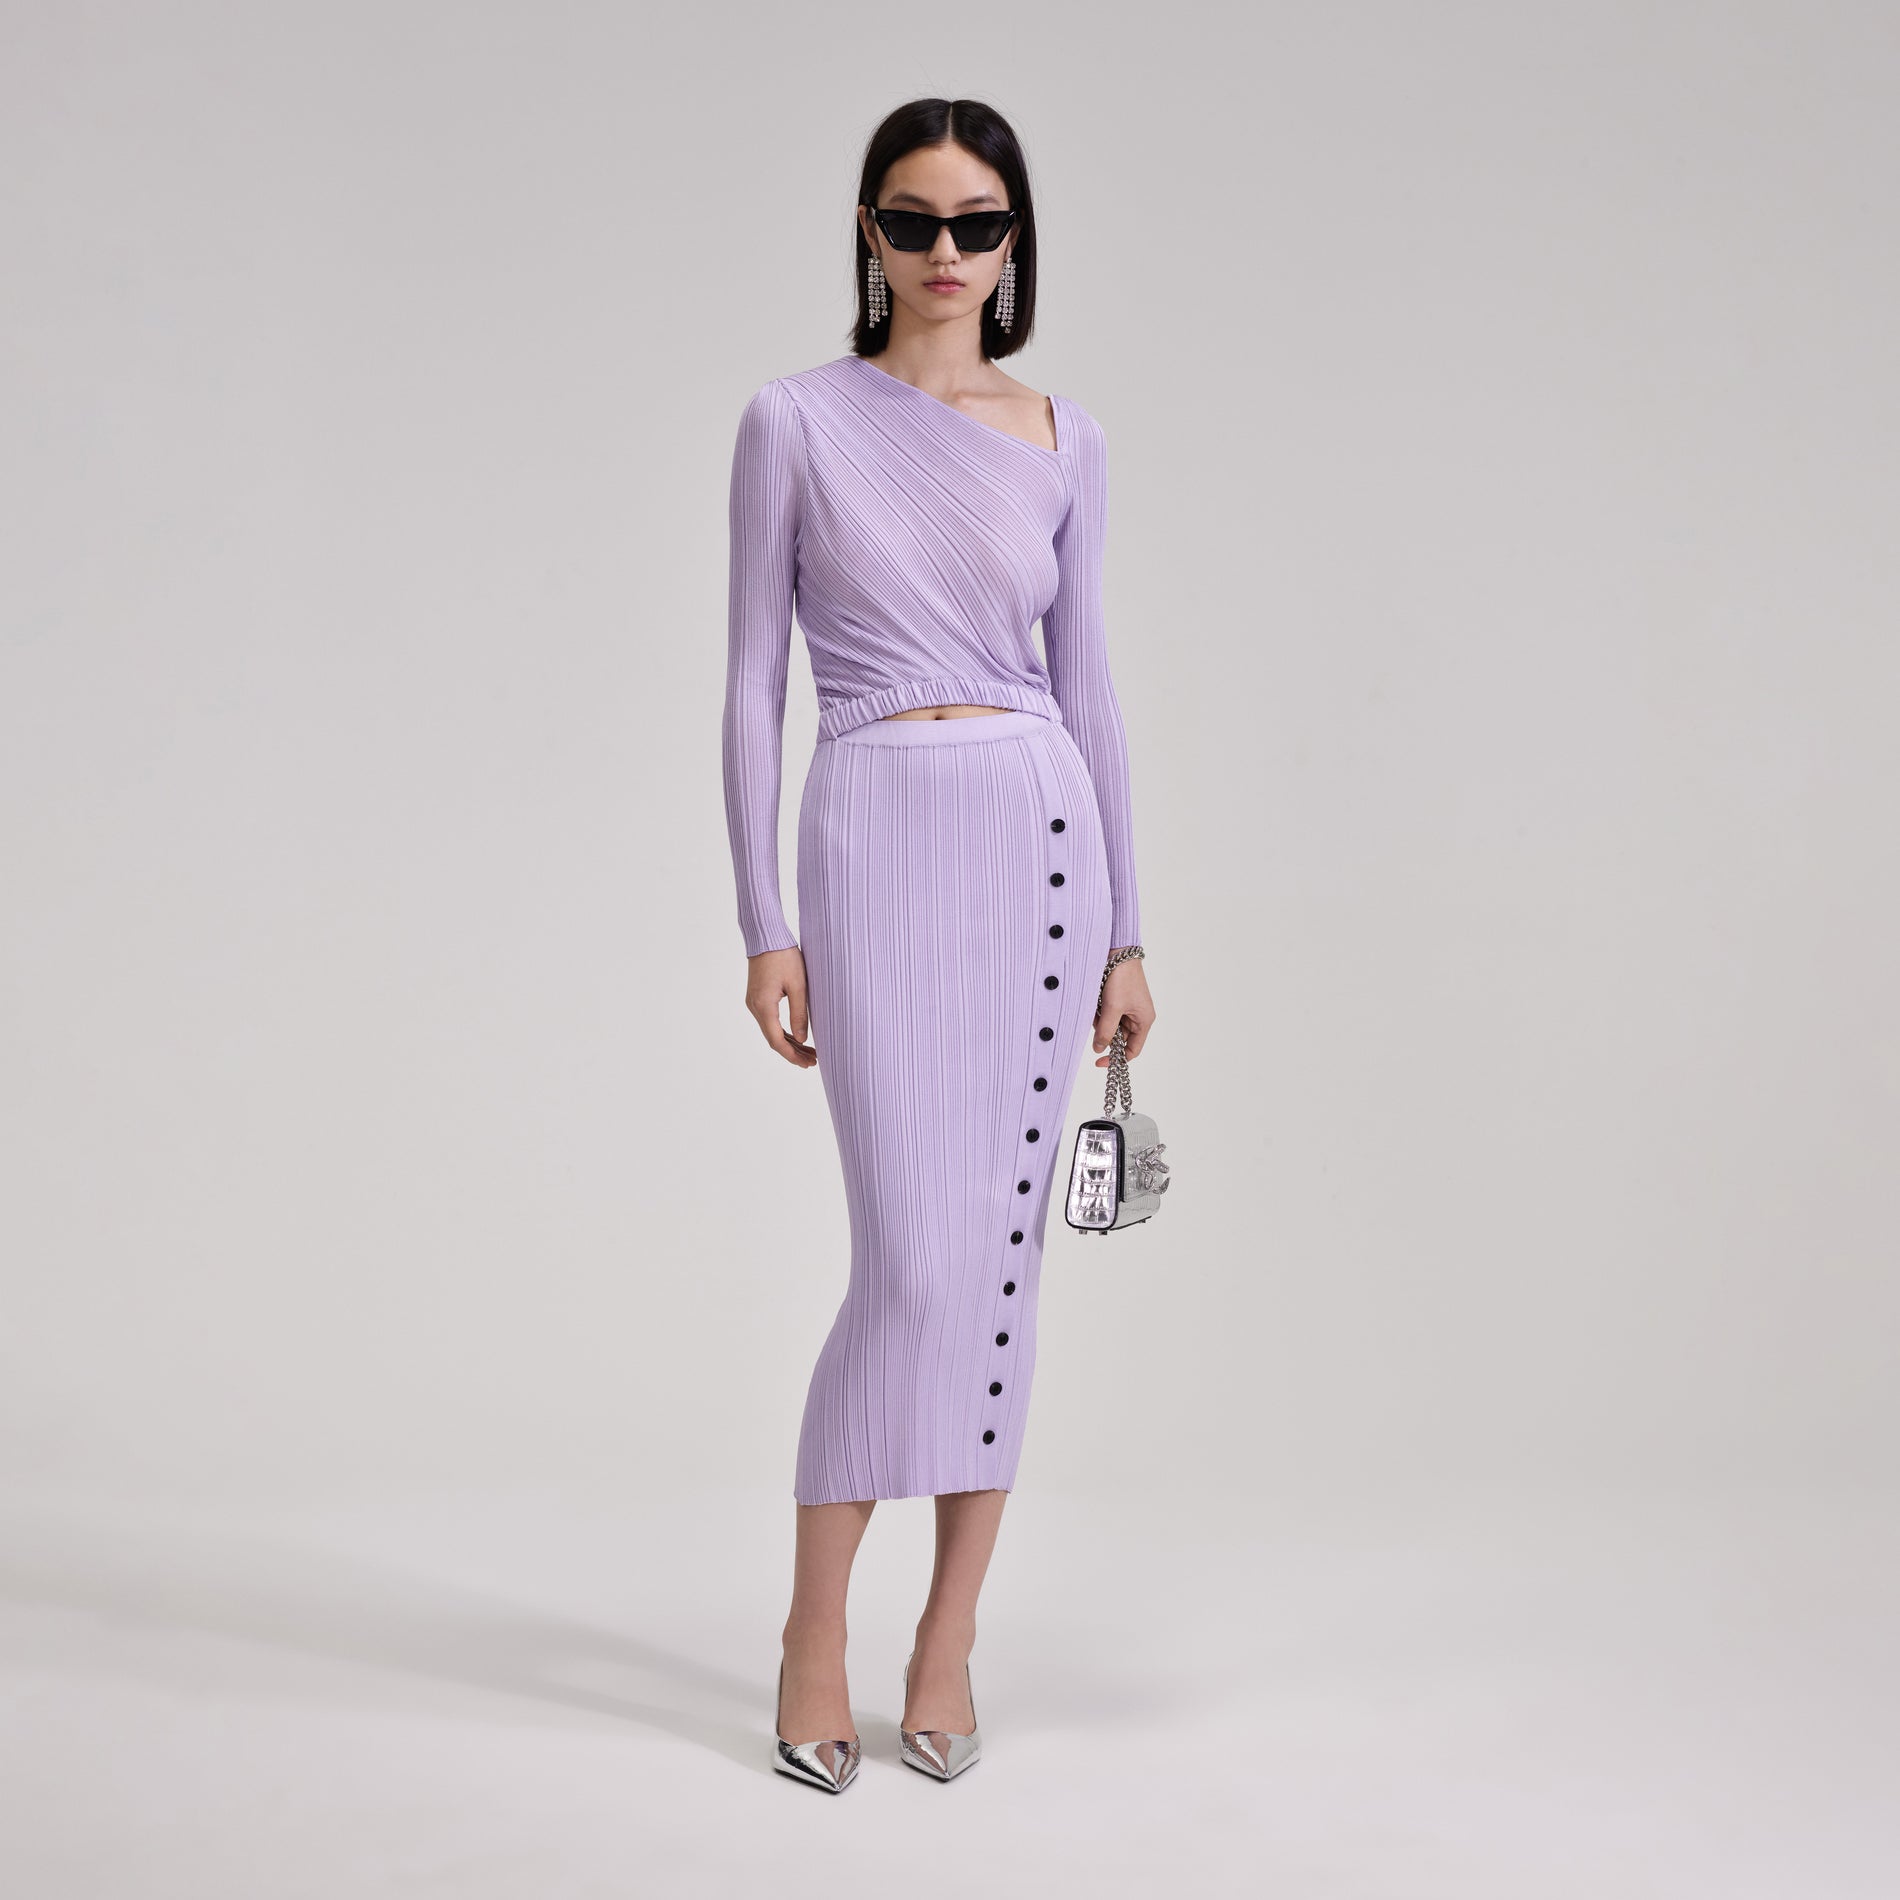 A woman wearing the Lilac Knit Midi Dress